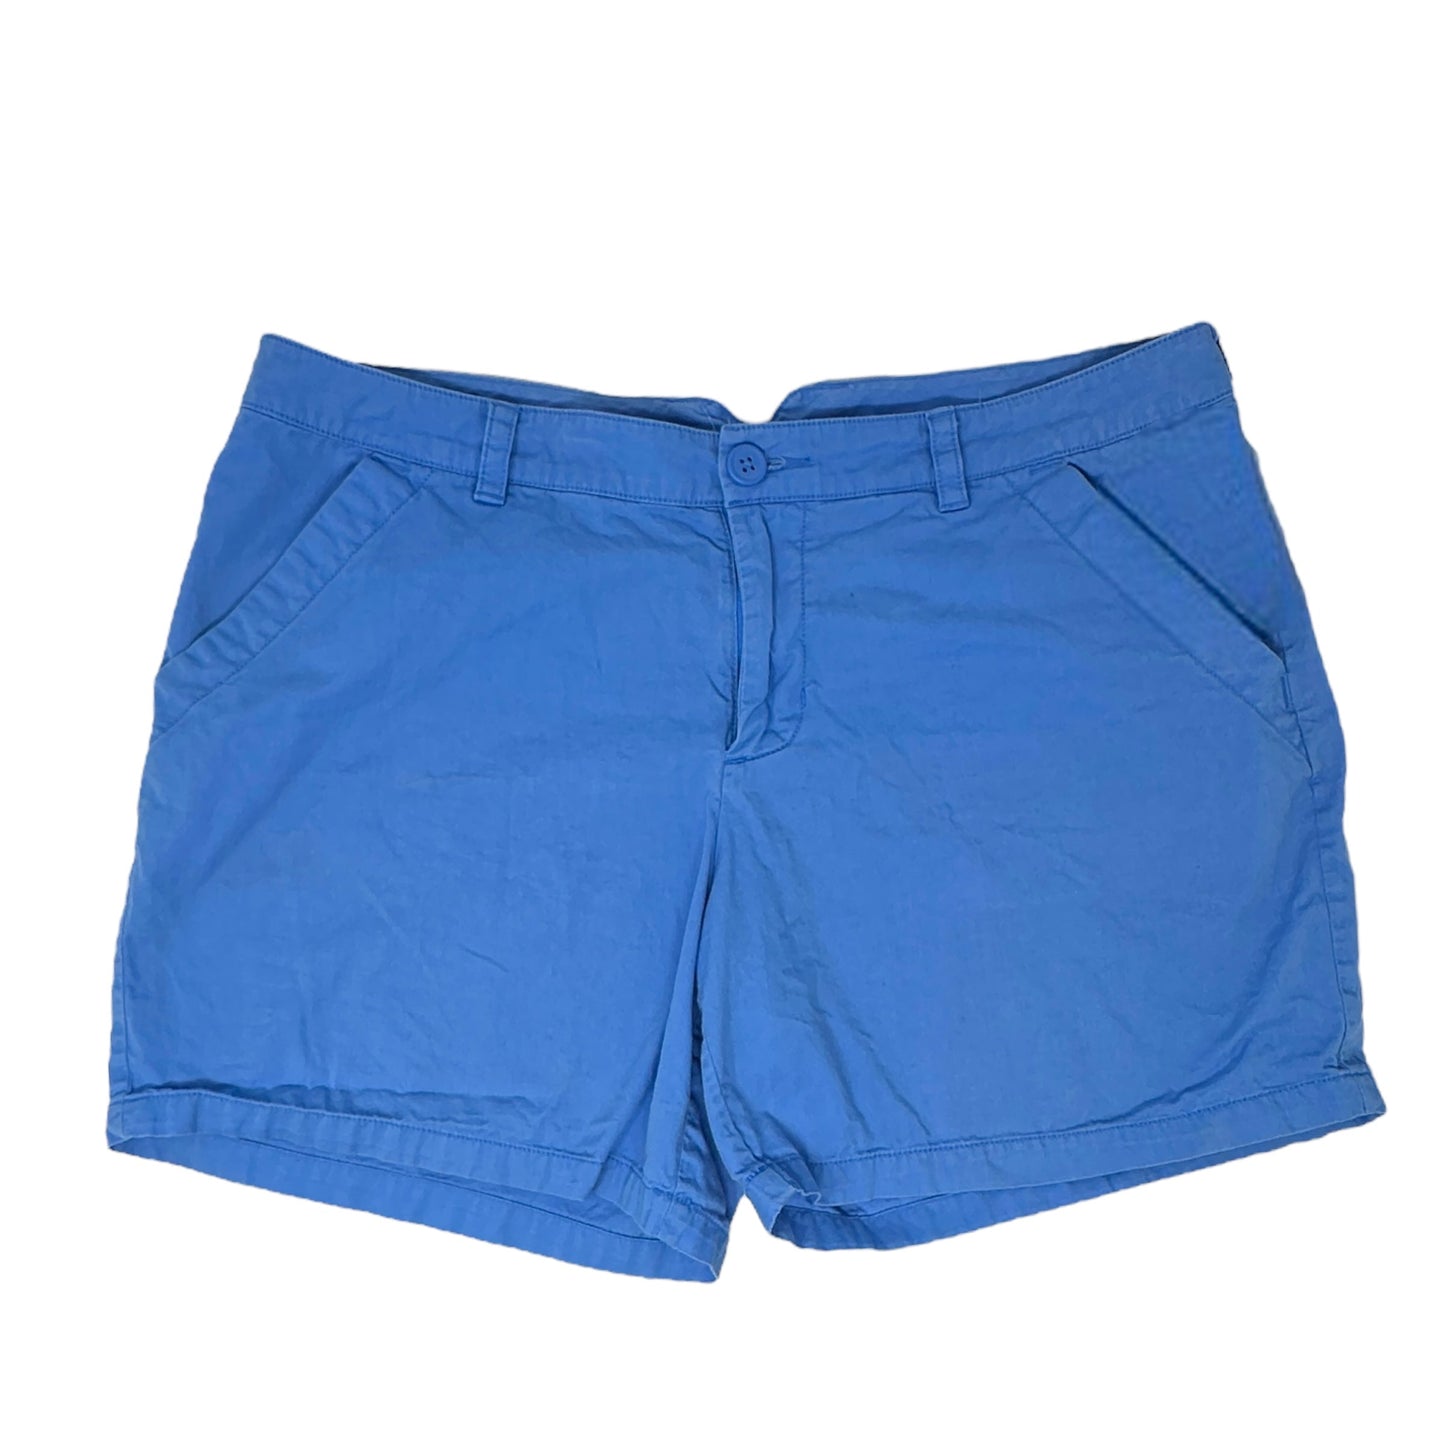 Blue Shorts Columbia, Size 14